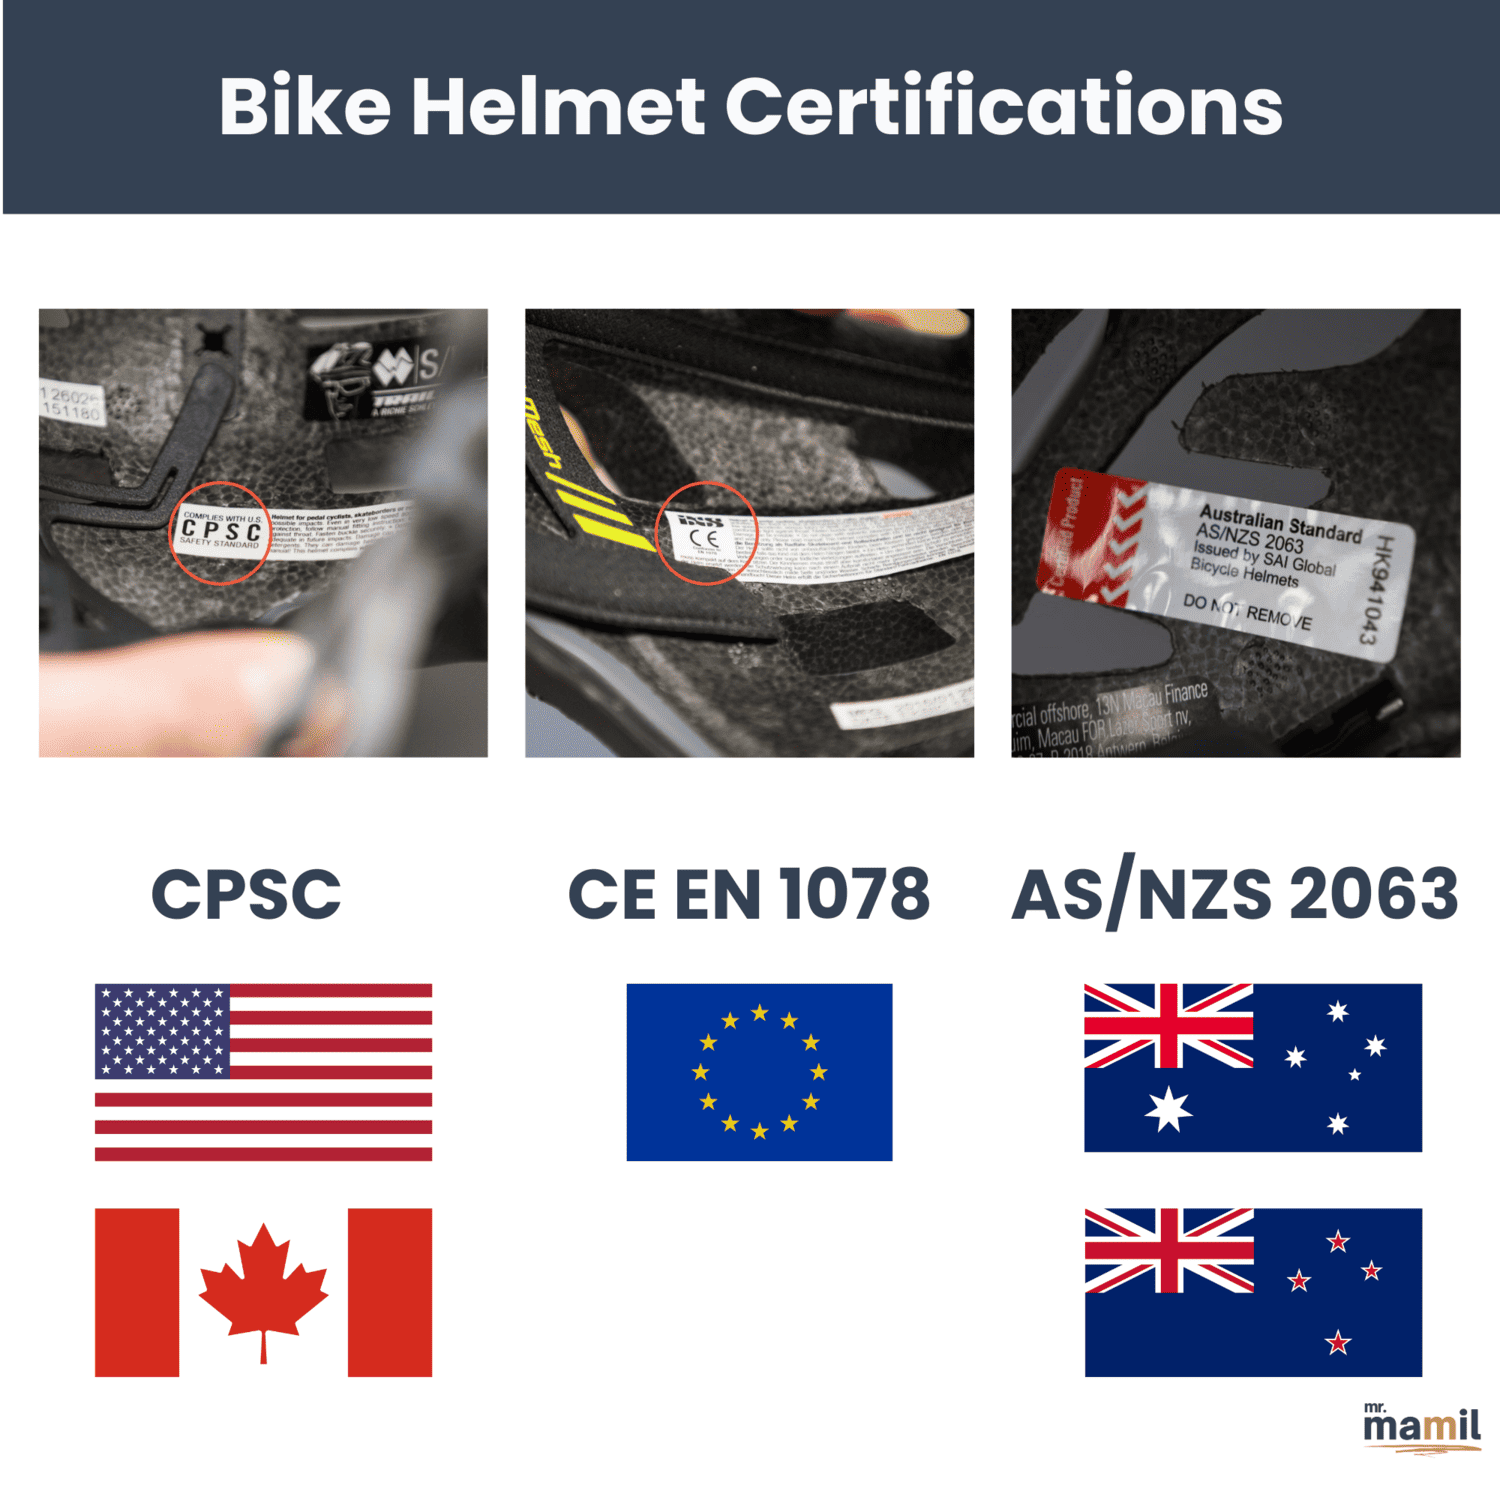 Types of Bicycle Helmet Certifications